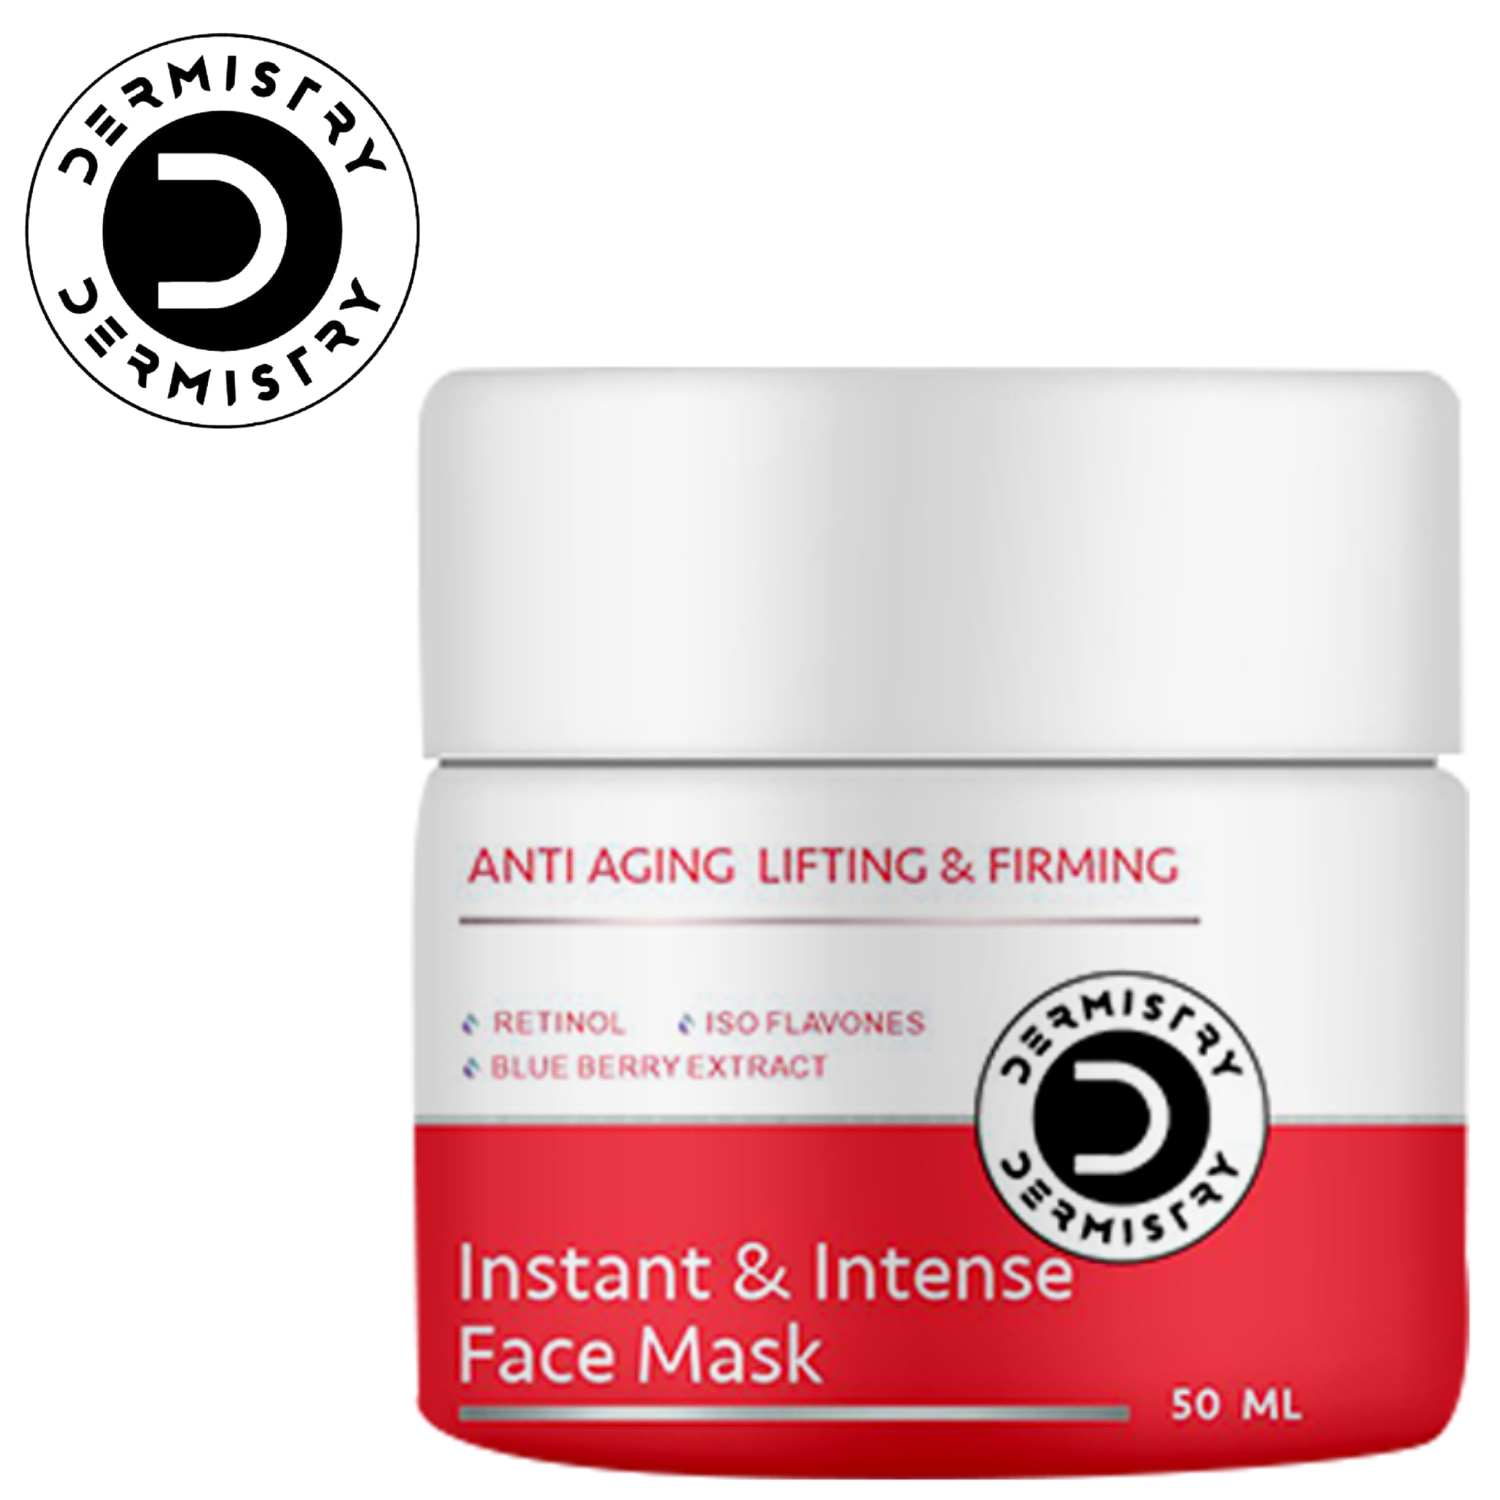 Dermistry Anti Aging Instant Intense Face Mask Retinol Blue Berry Lifting Firming Skin Tightening-50ml